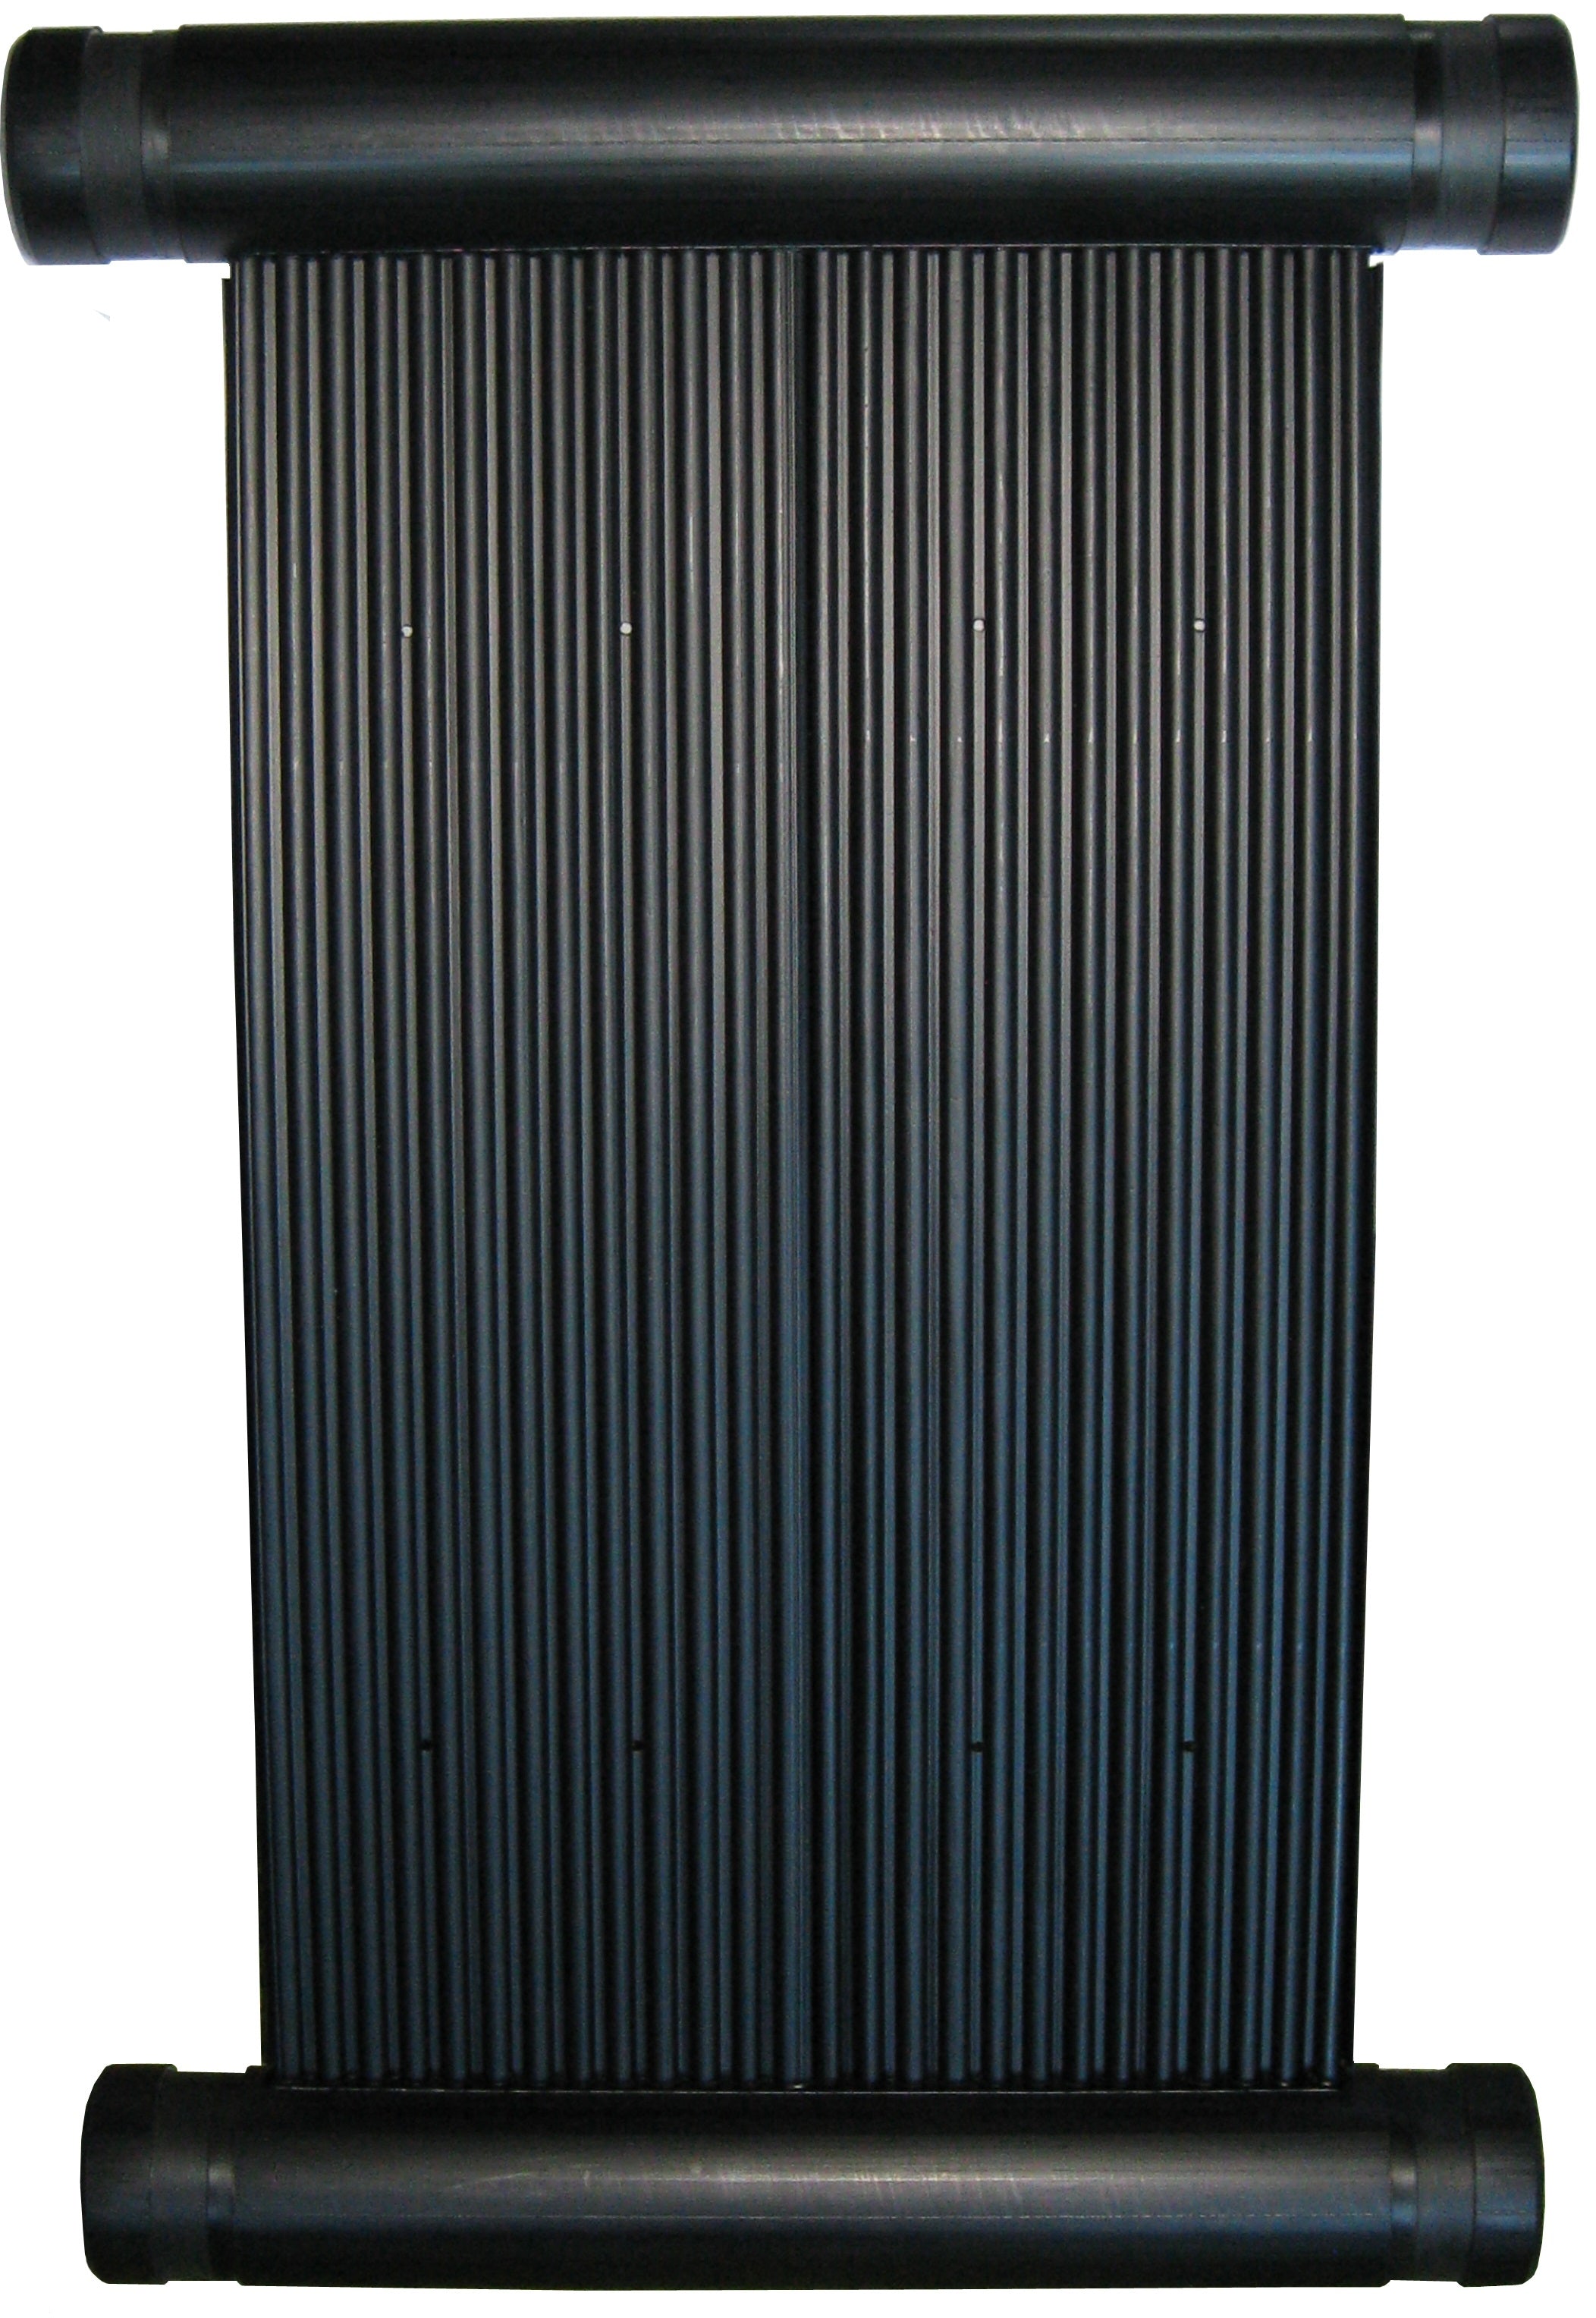 Aquasol Solar Pool Heating Panel 4' X 8' - 2" Headers (Aq32-2)